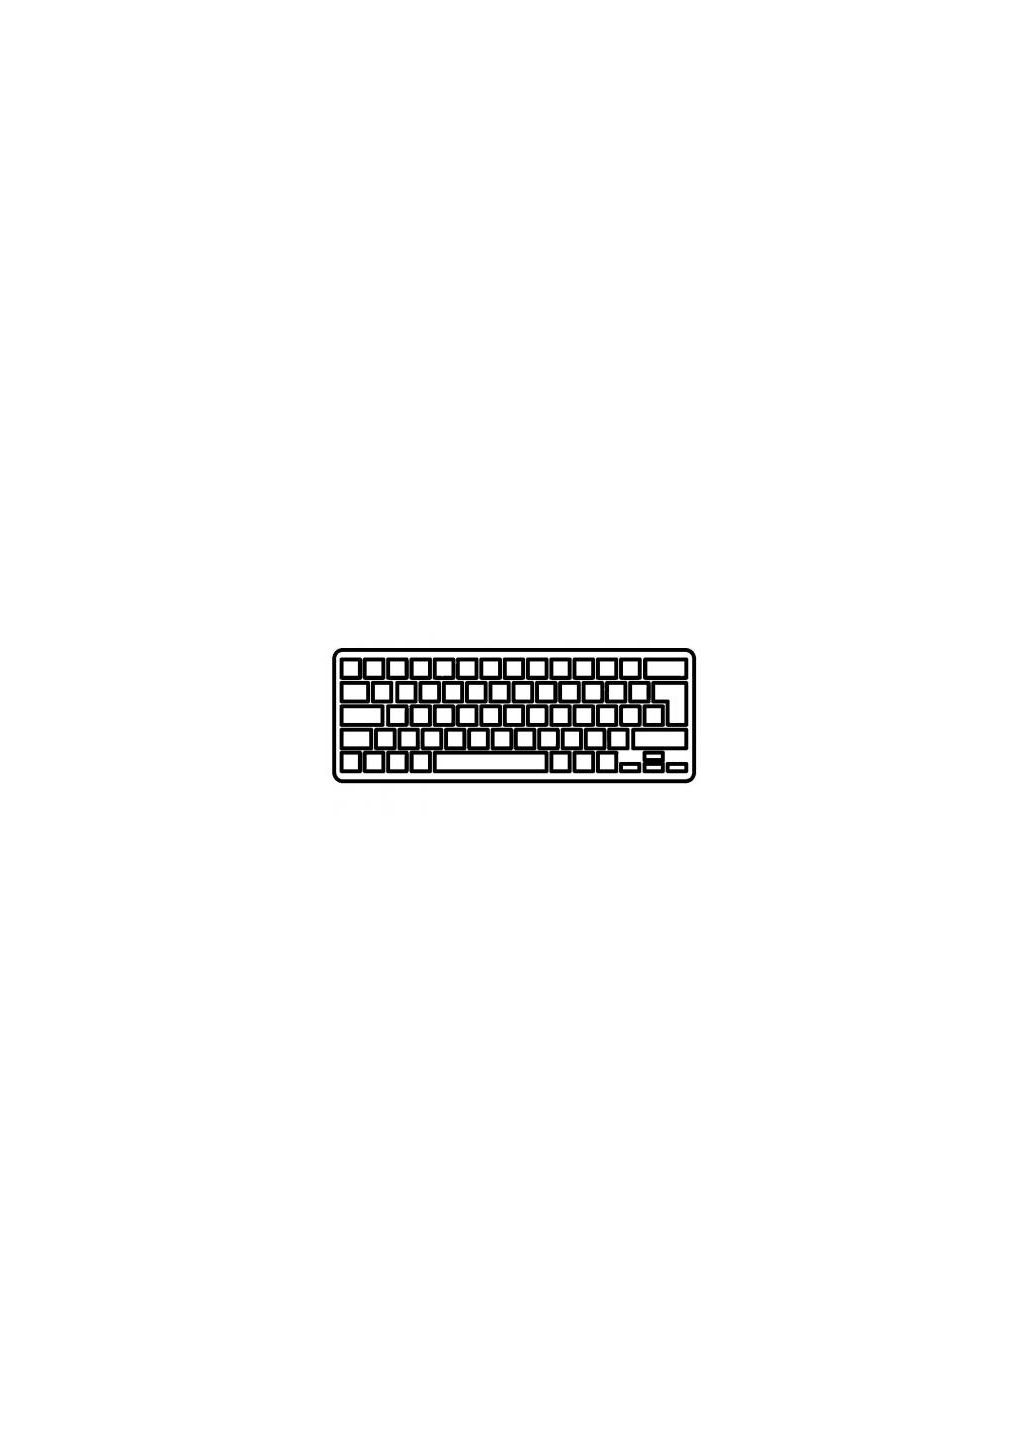 Клавиатура ноутбука VivoBook X556,X756 black,wo/frame,RU/US (A46002) Asus vivobook x556, x756 black, wo/frame, ru/us (276707799)